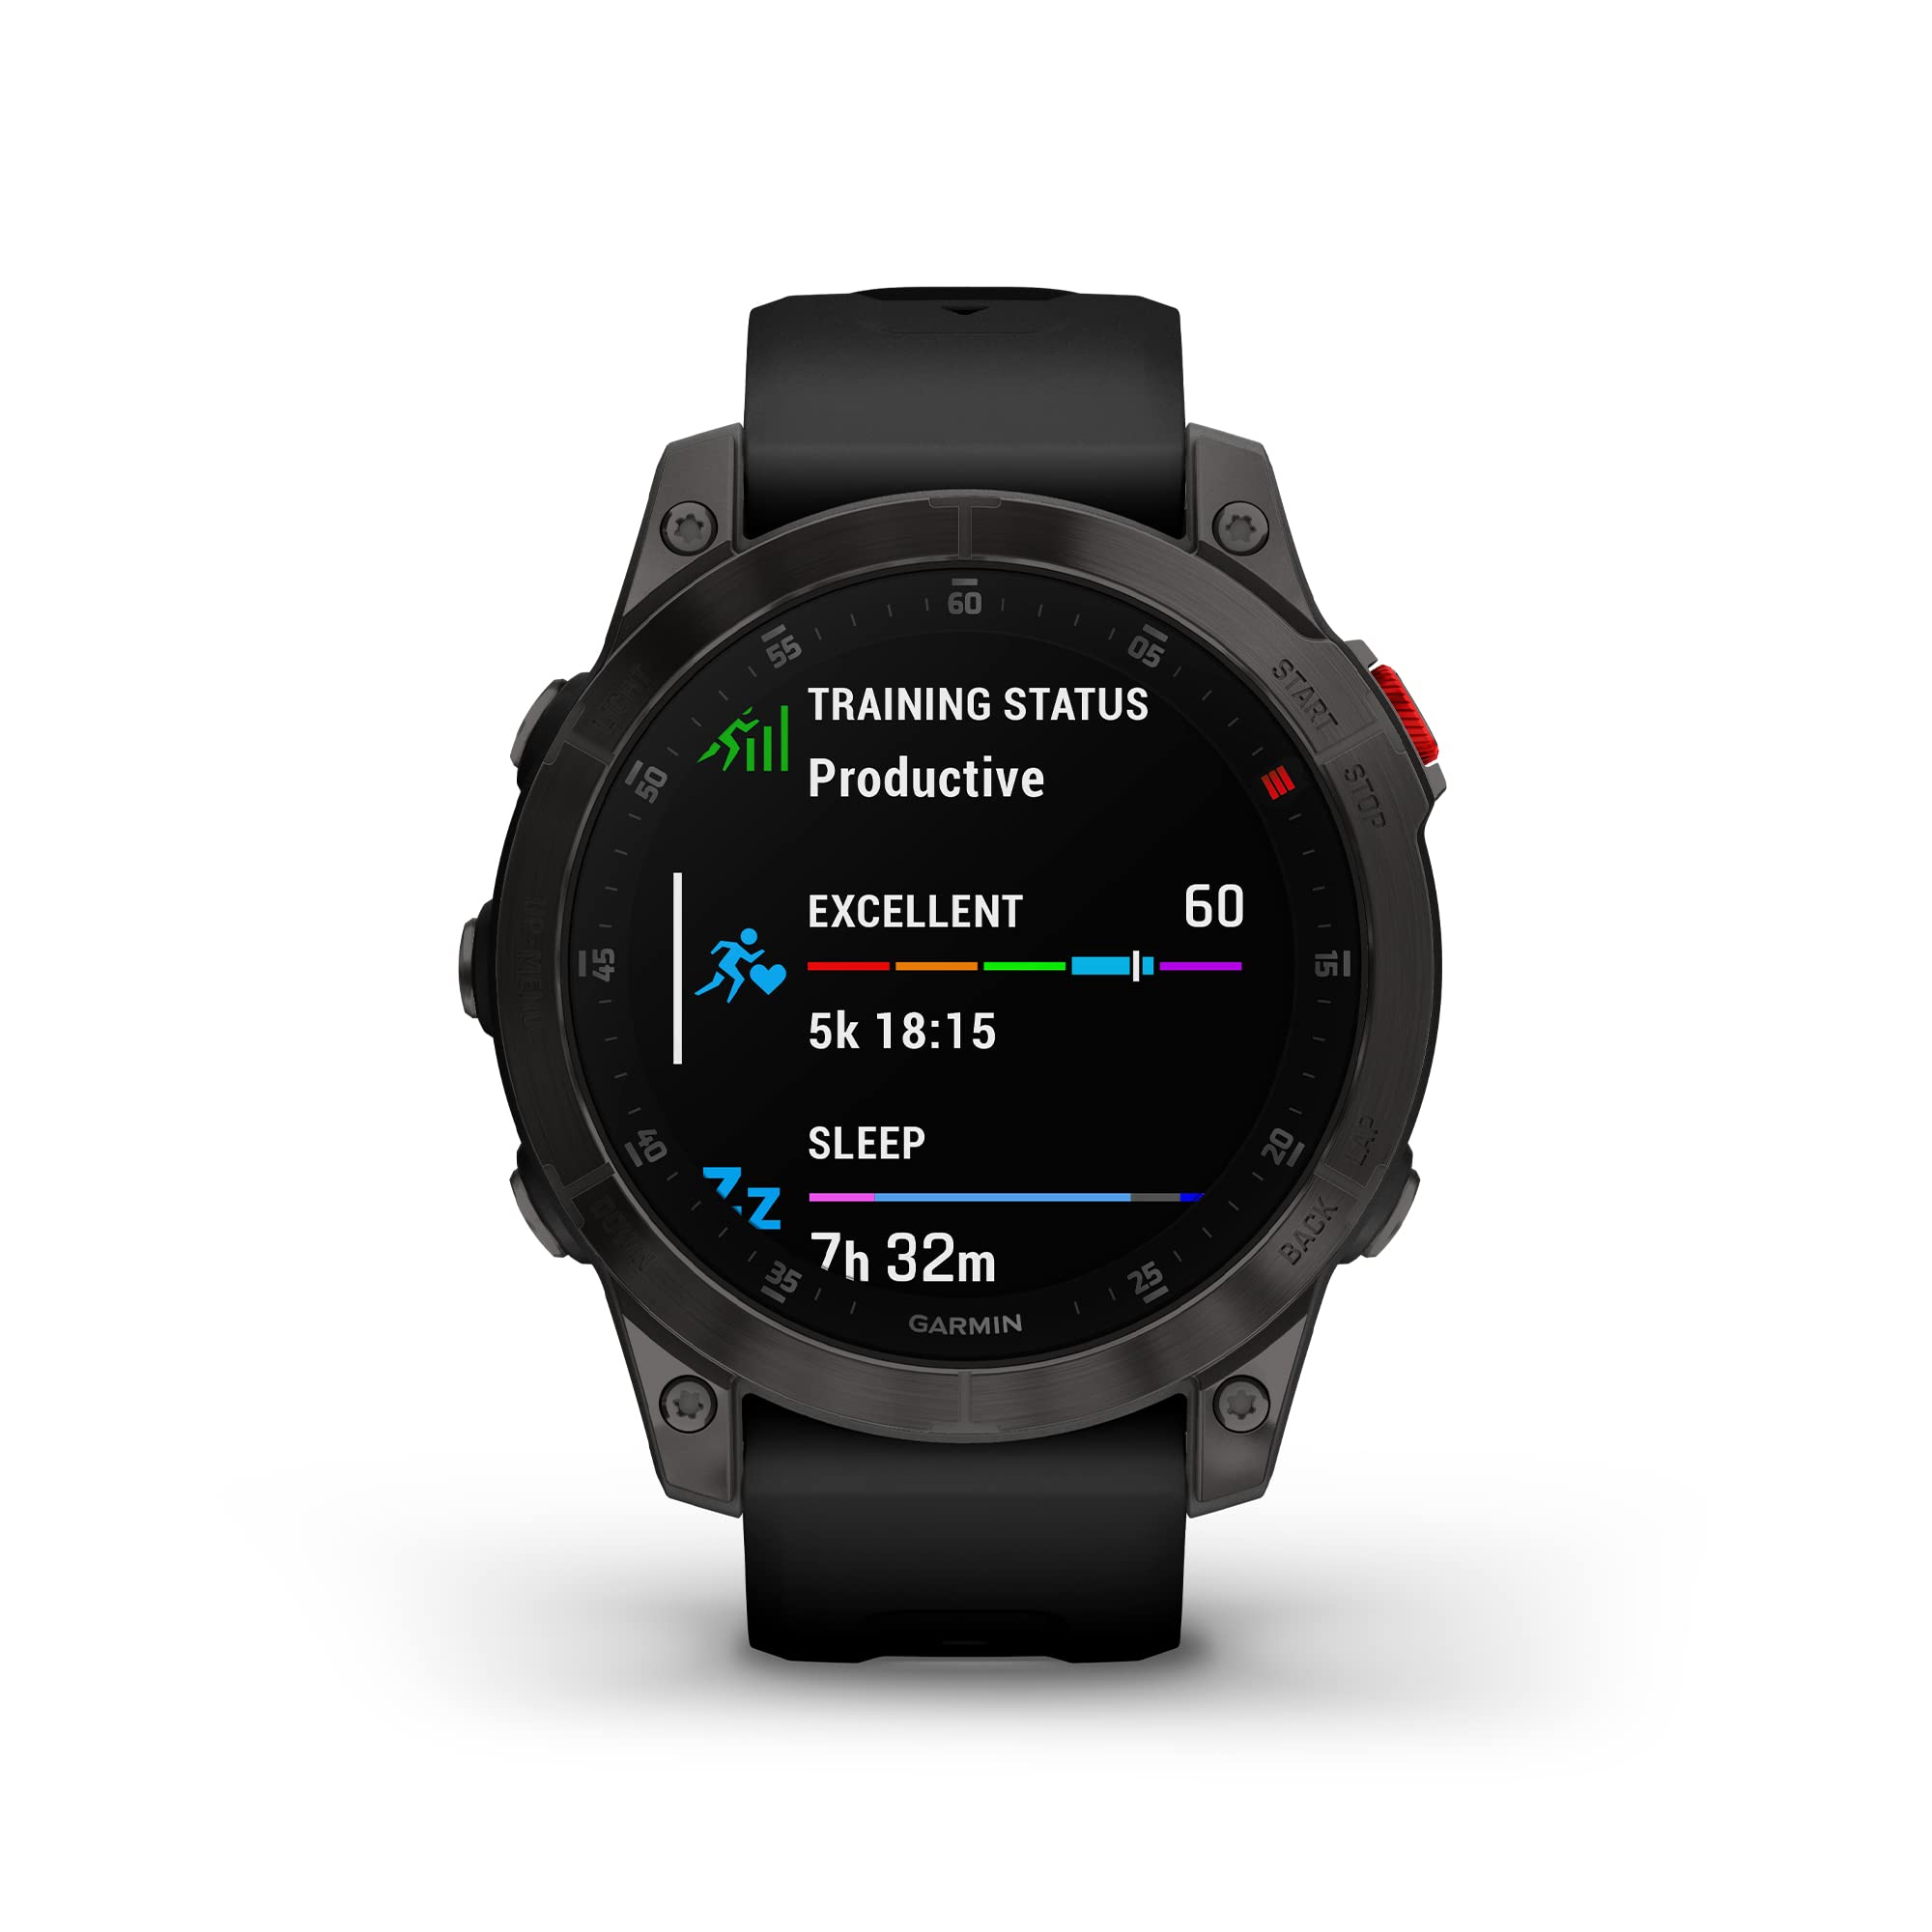 Garmin epix Gen 2, Premium Active smartwatch, Health and Wellness Features & QuickFit 22 Watch Band - Vented Titanium Bracelet with Carbon Gray DLC Coating